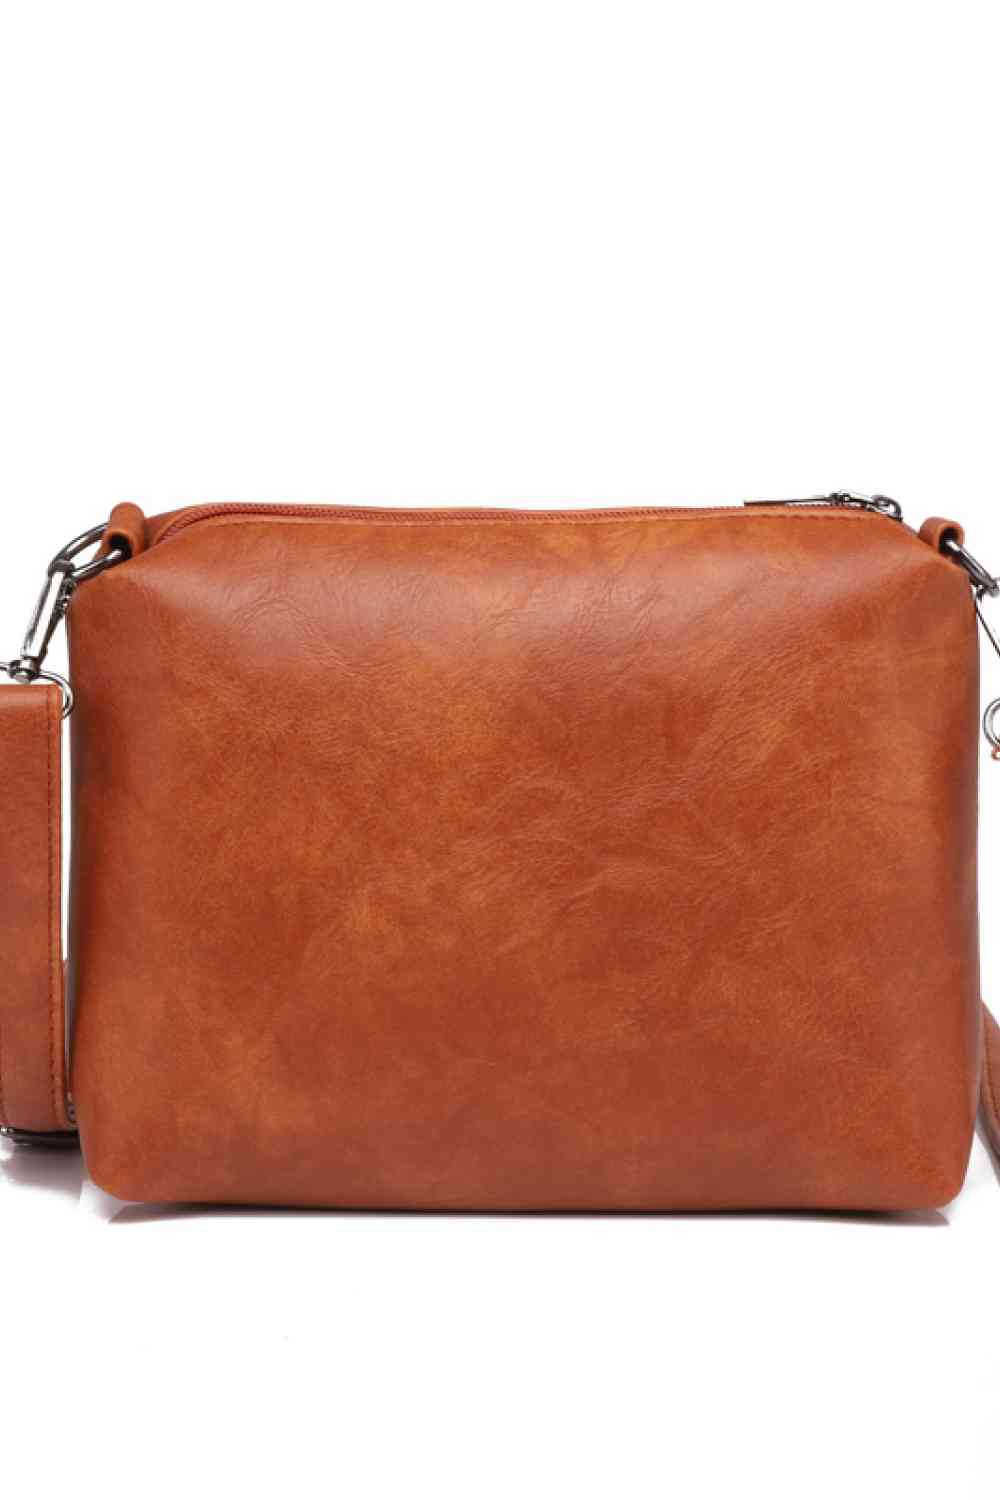 PU Leather Bag Set